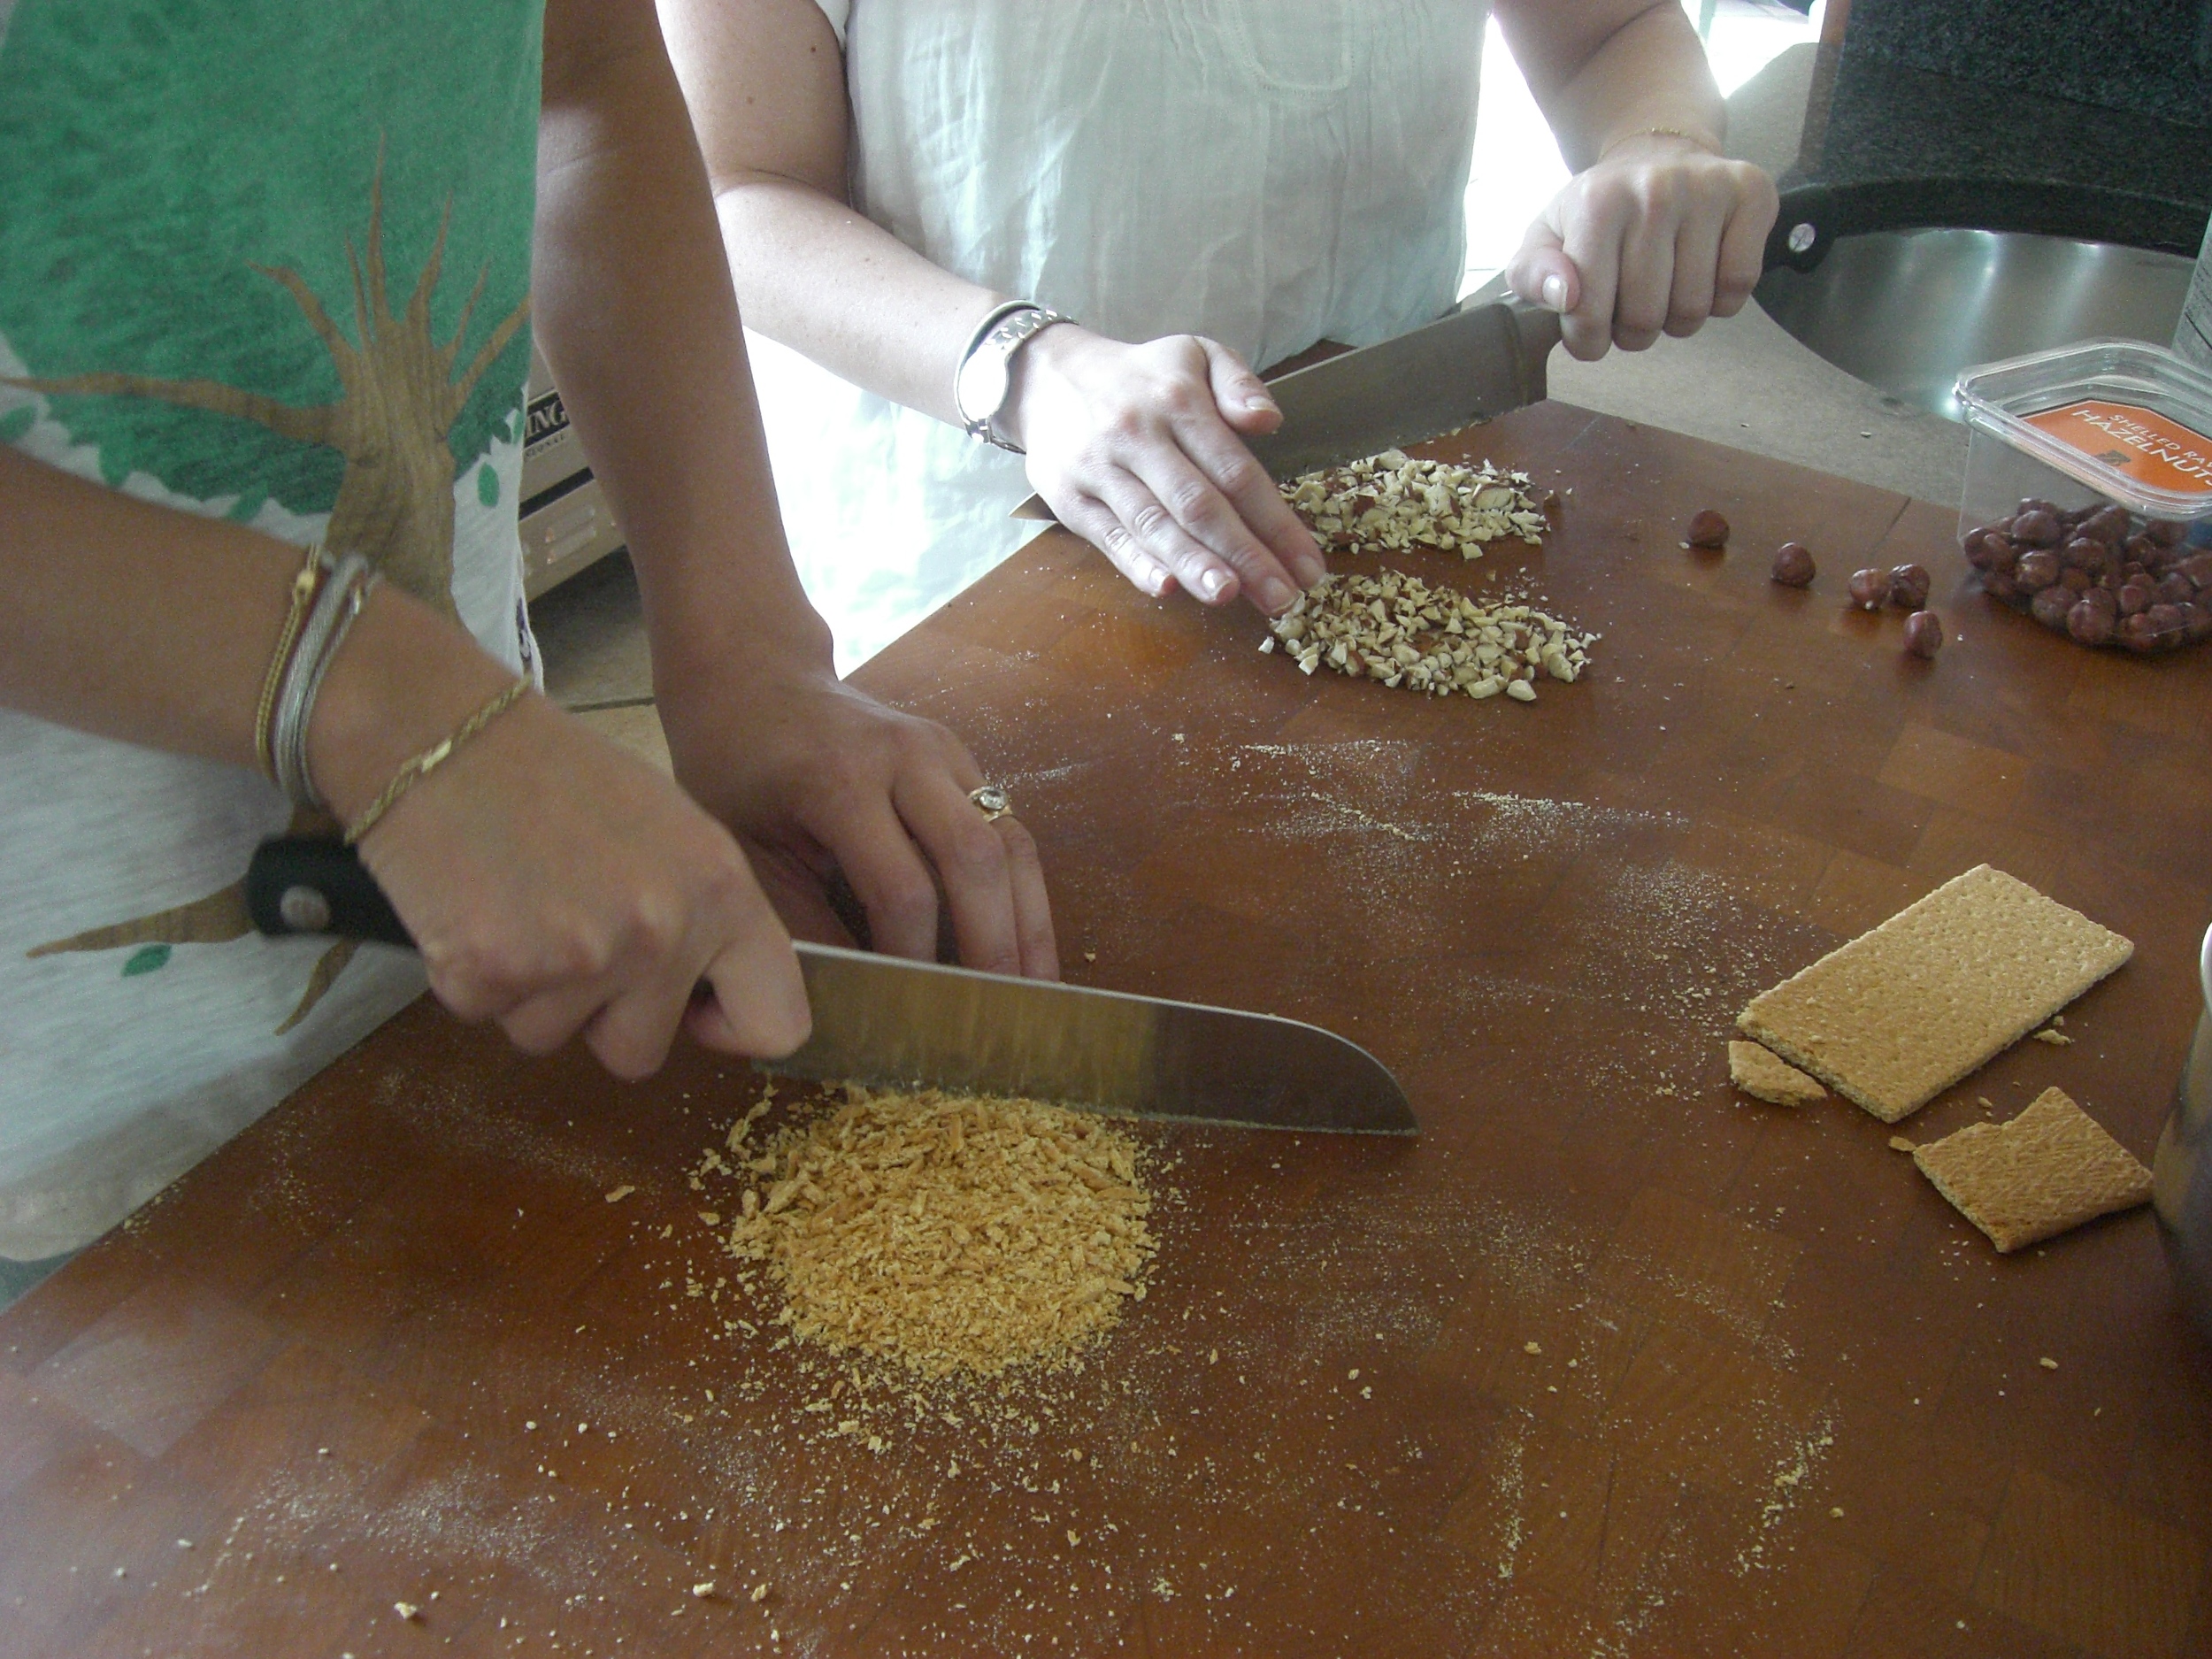 Here Liza is chopping the graham crackers for the vegan magic bars.